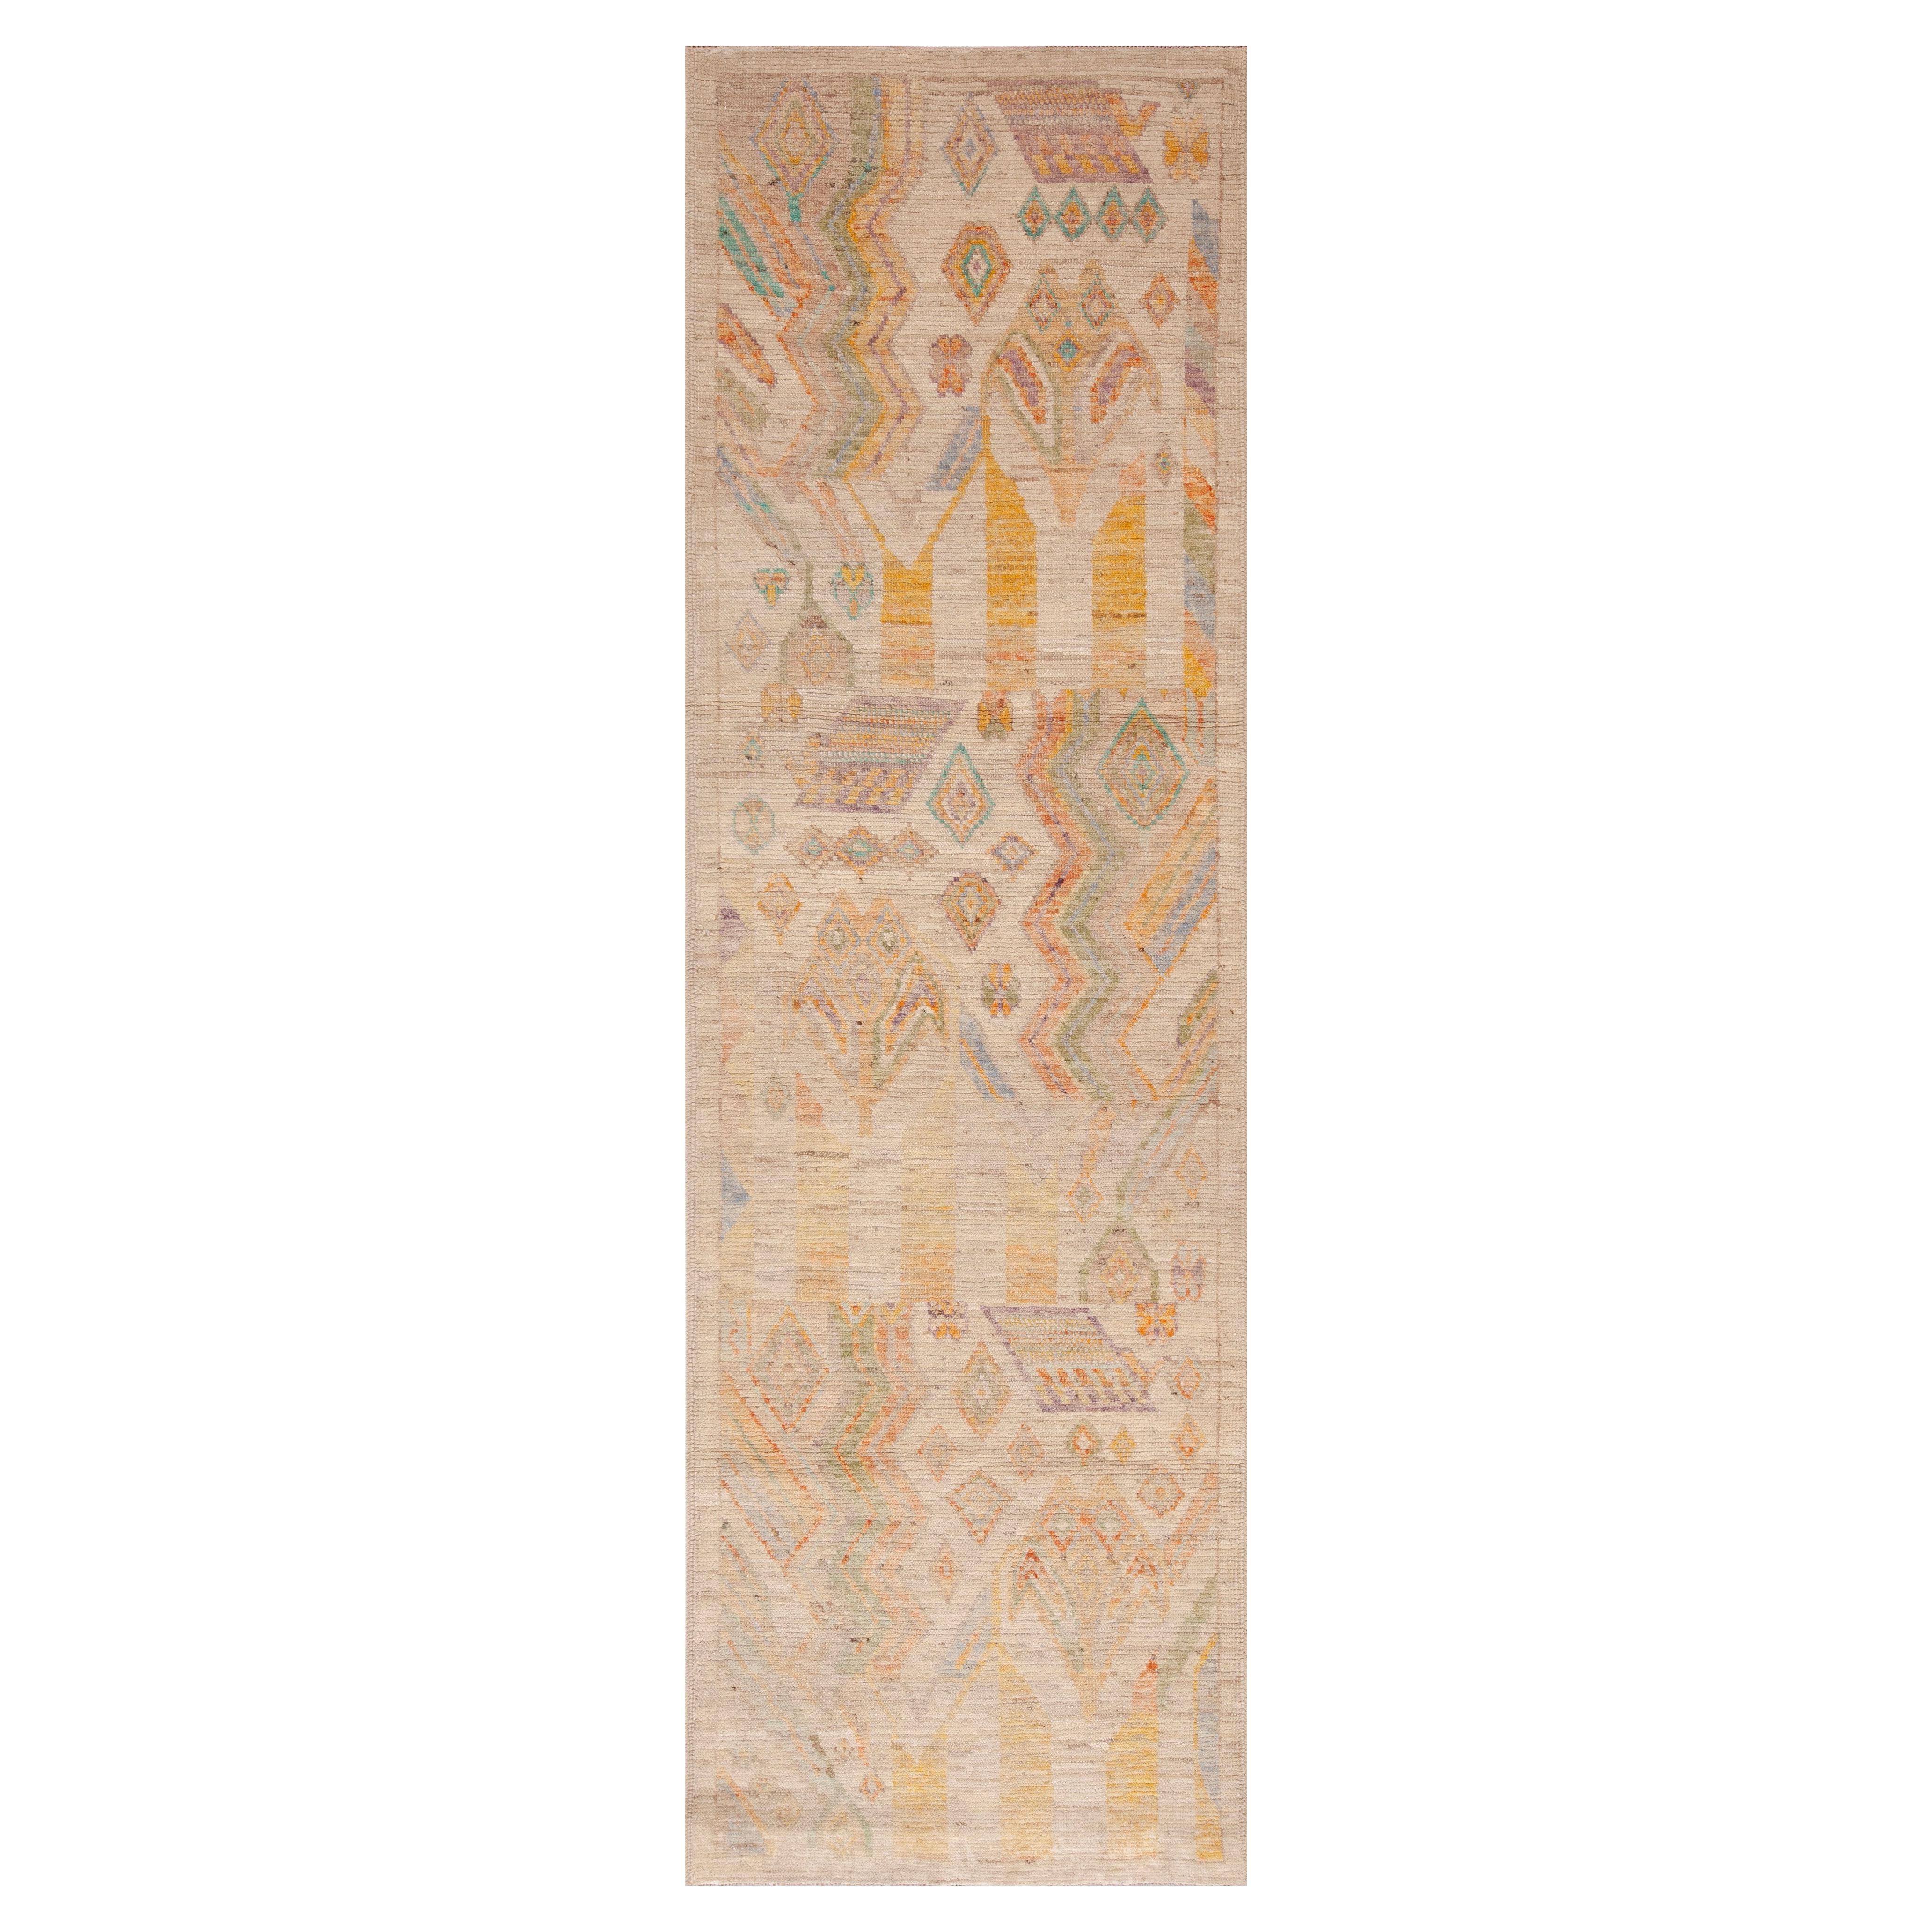 Collection Nazmiyal Tribal Nomadic Light Ivory Color Modern Runner Rug 3' x 9'9"